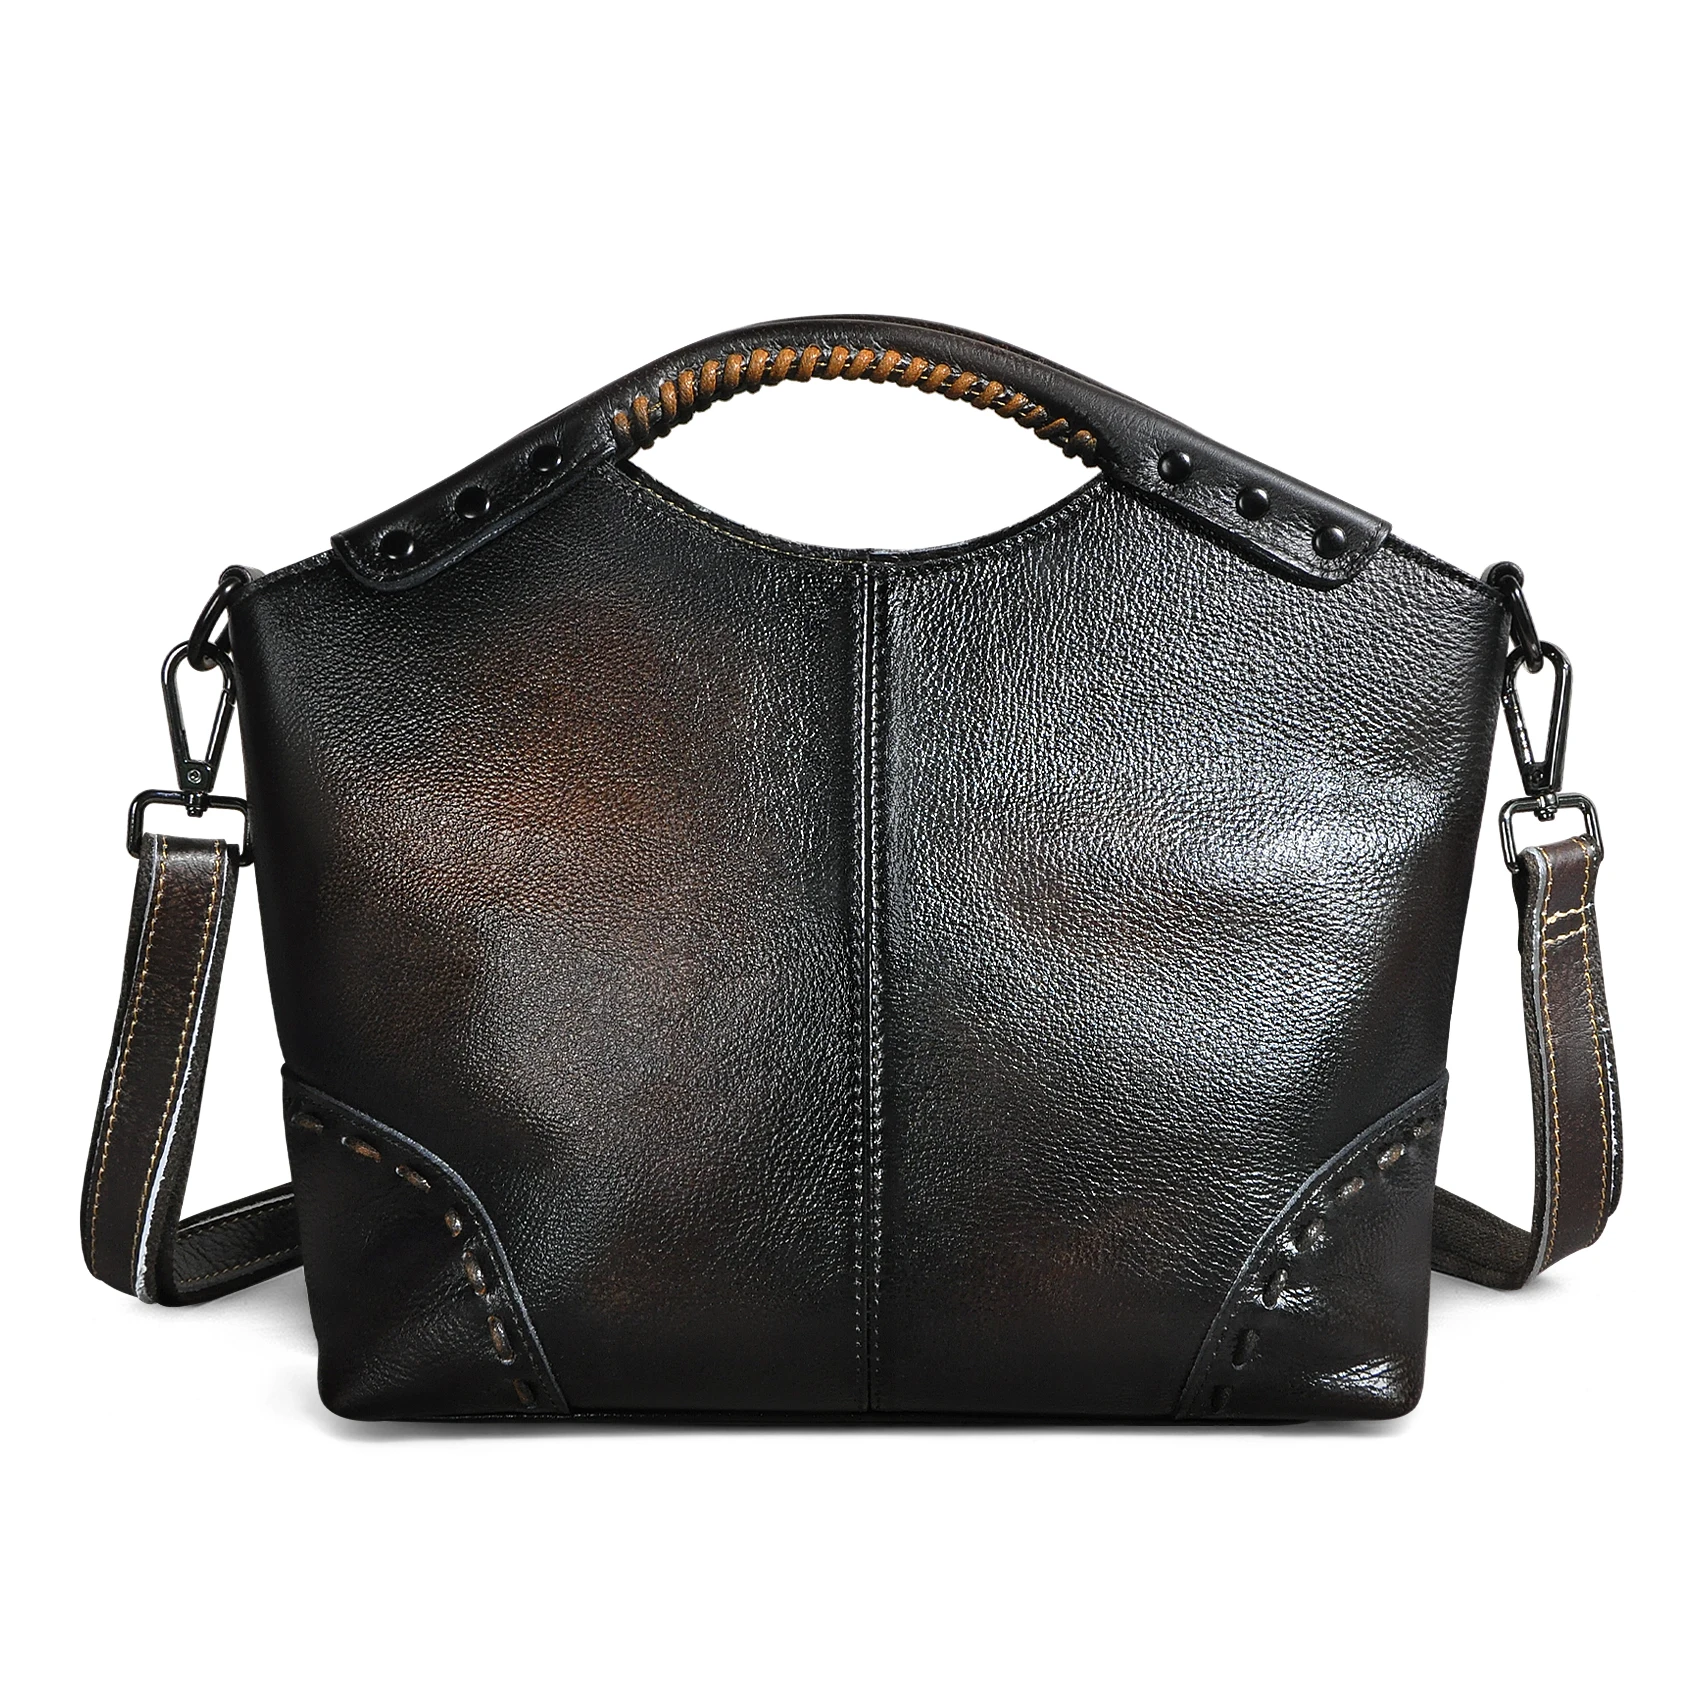 

Real LEATHER Famous Brand High Quality Luxury Ladies Casual Design handbag Shoulder bag Women female ol elegant Tote bag 6640-c4